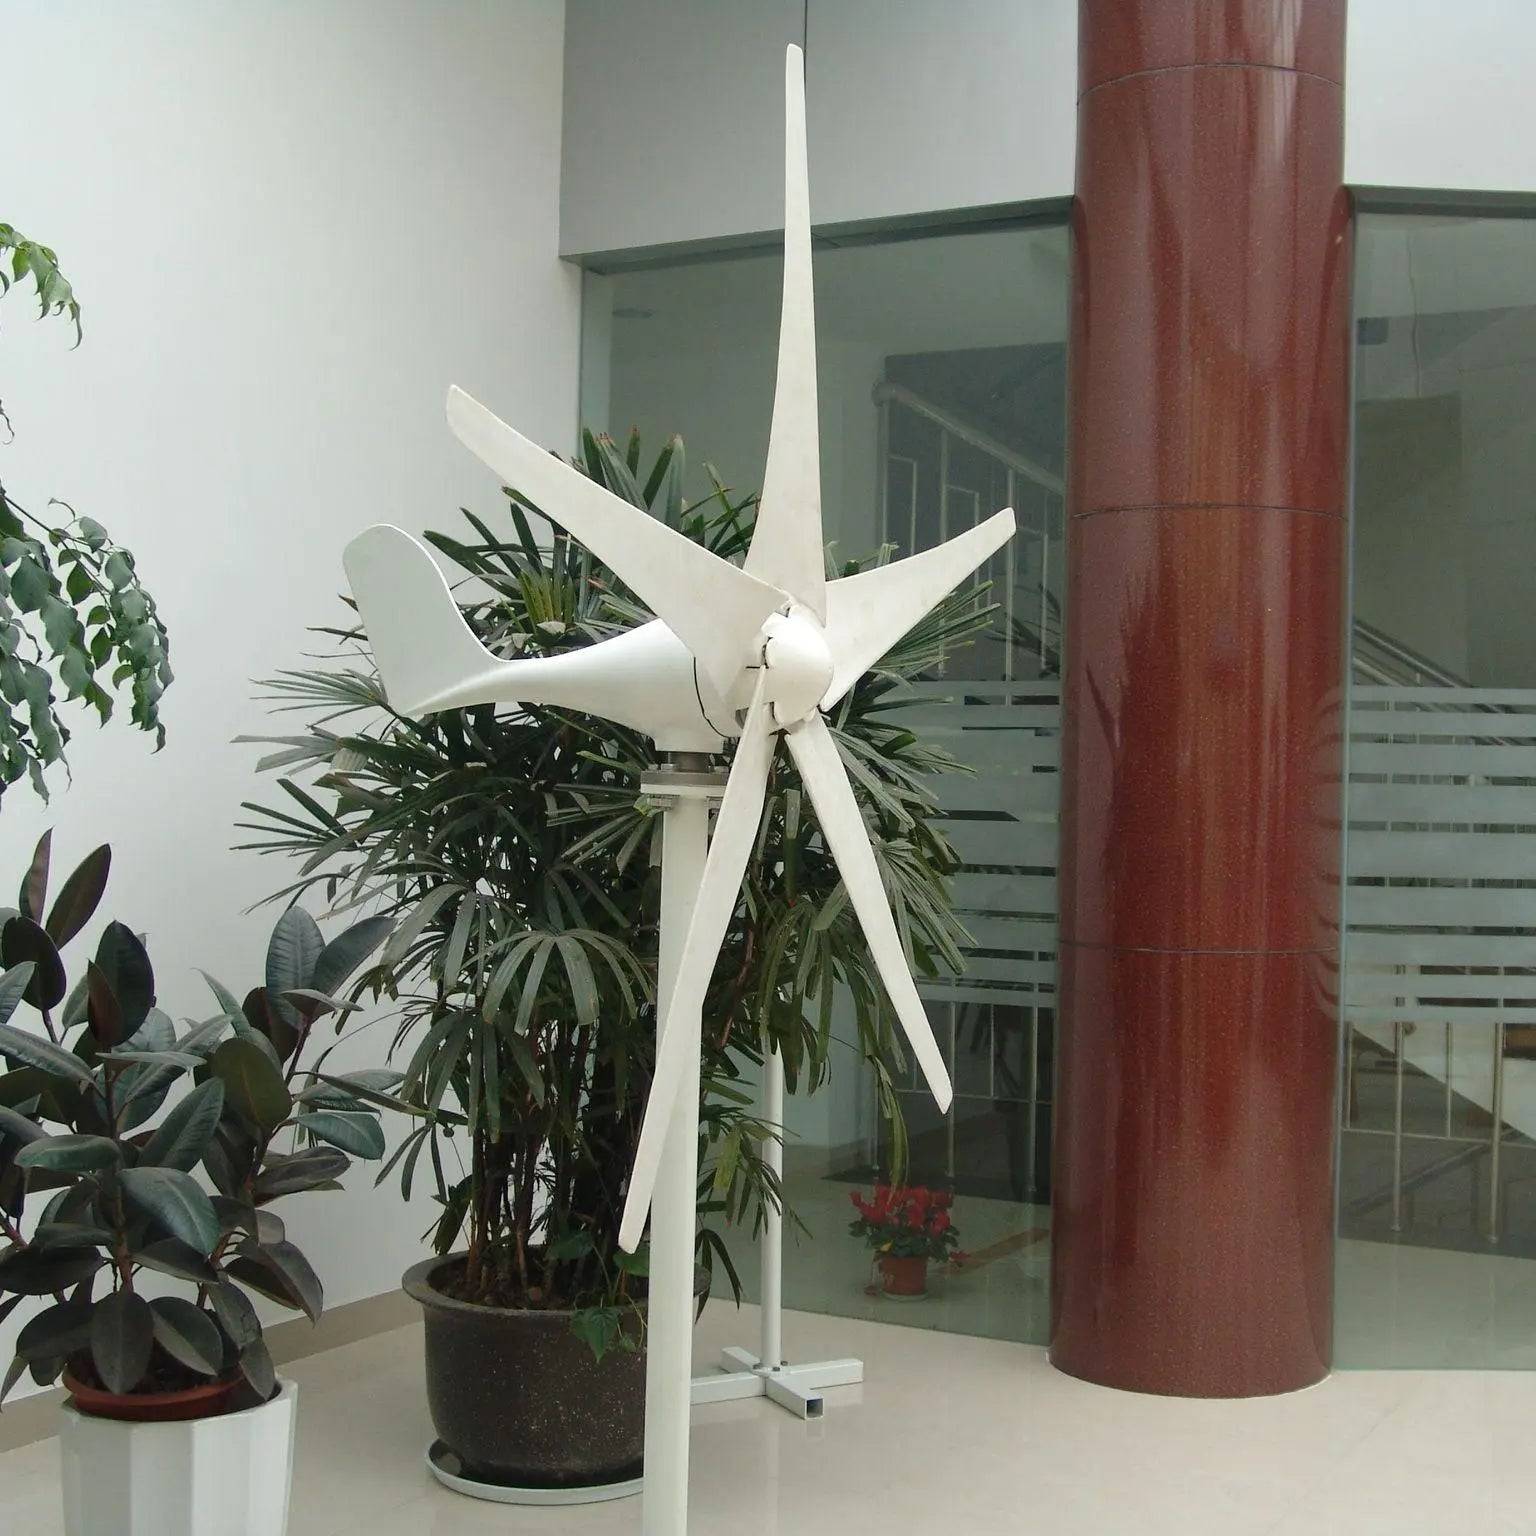 Wind Turbine Generator 300/400W small wind 12/14V waterproof controller - 54 Energy - Renewable Energy Store